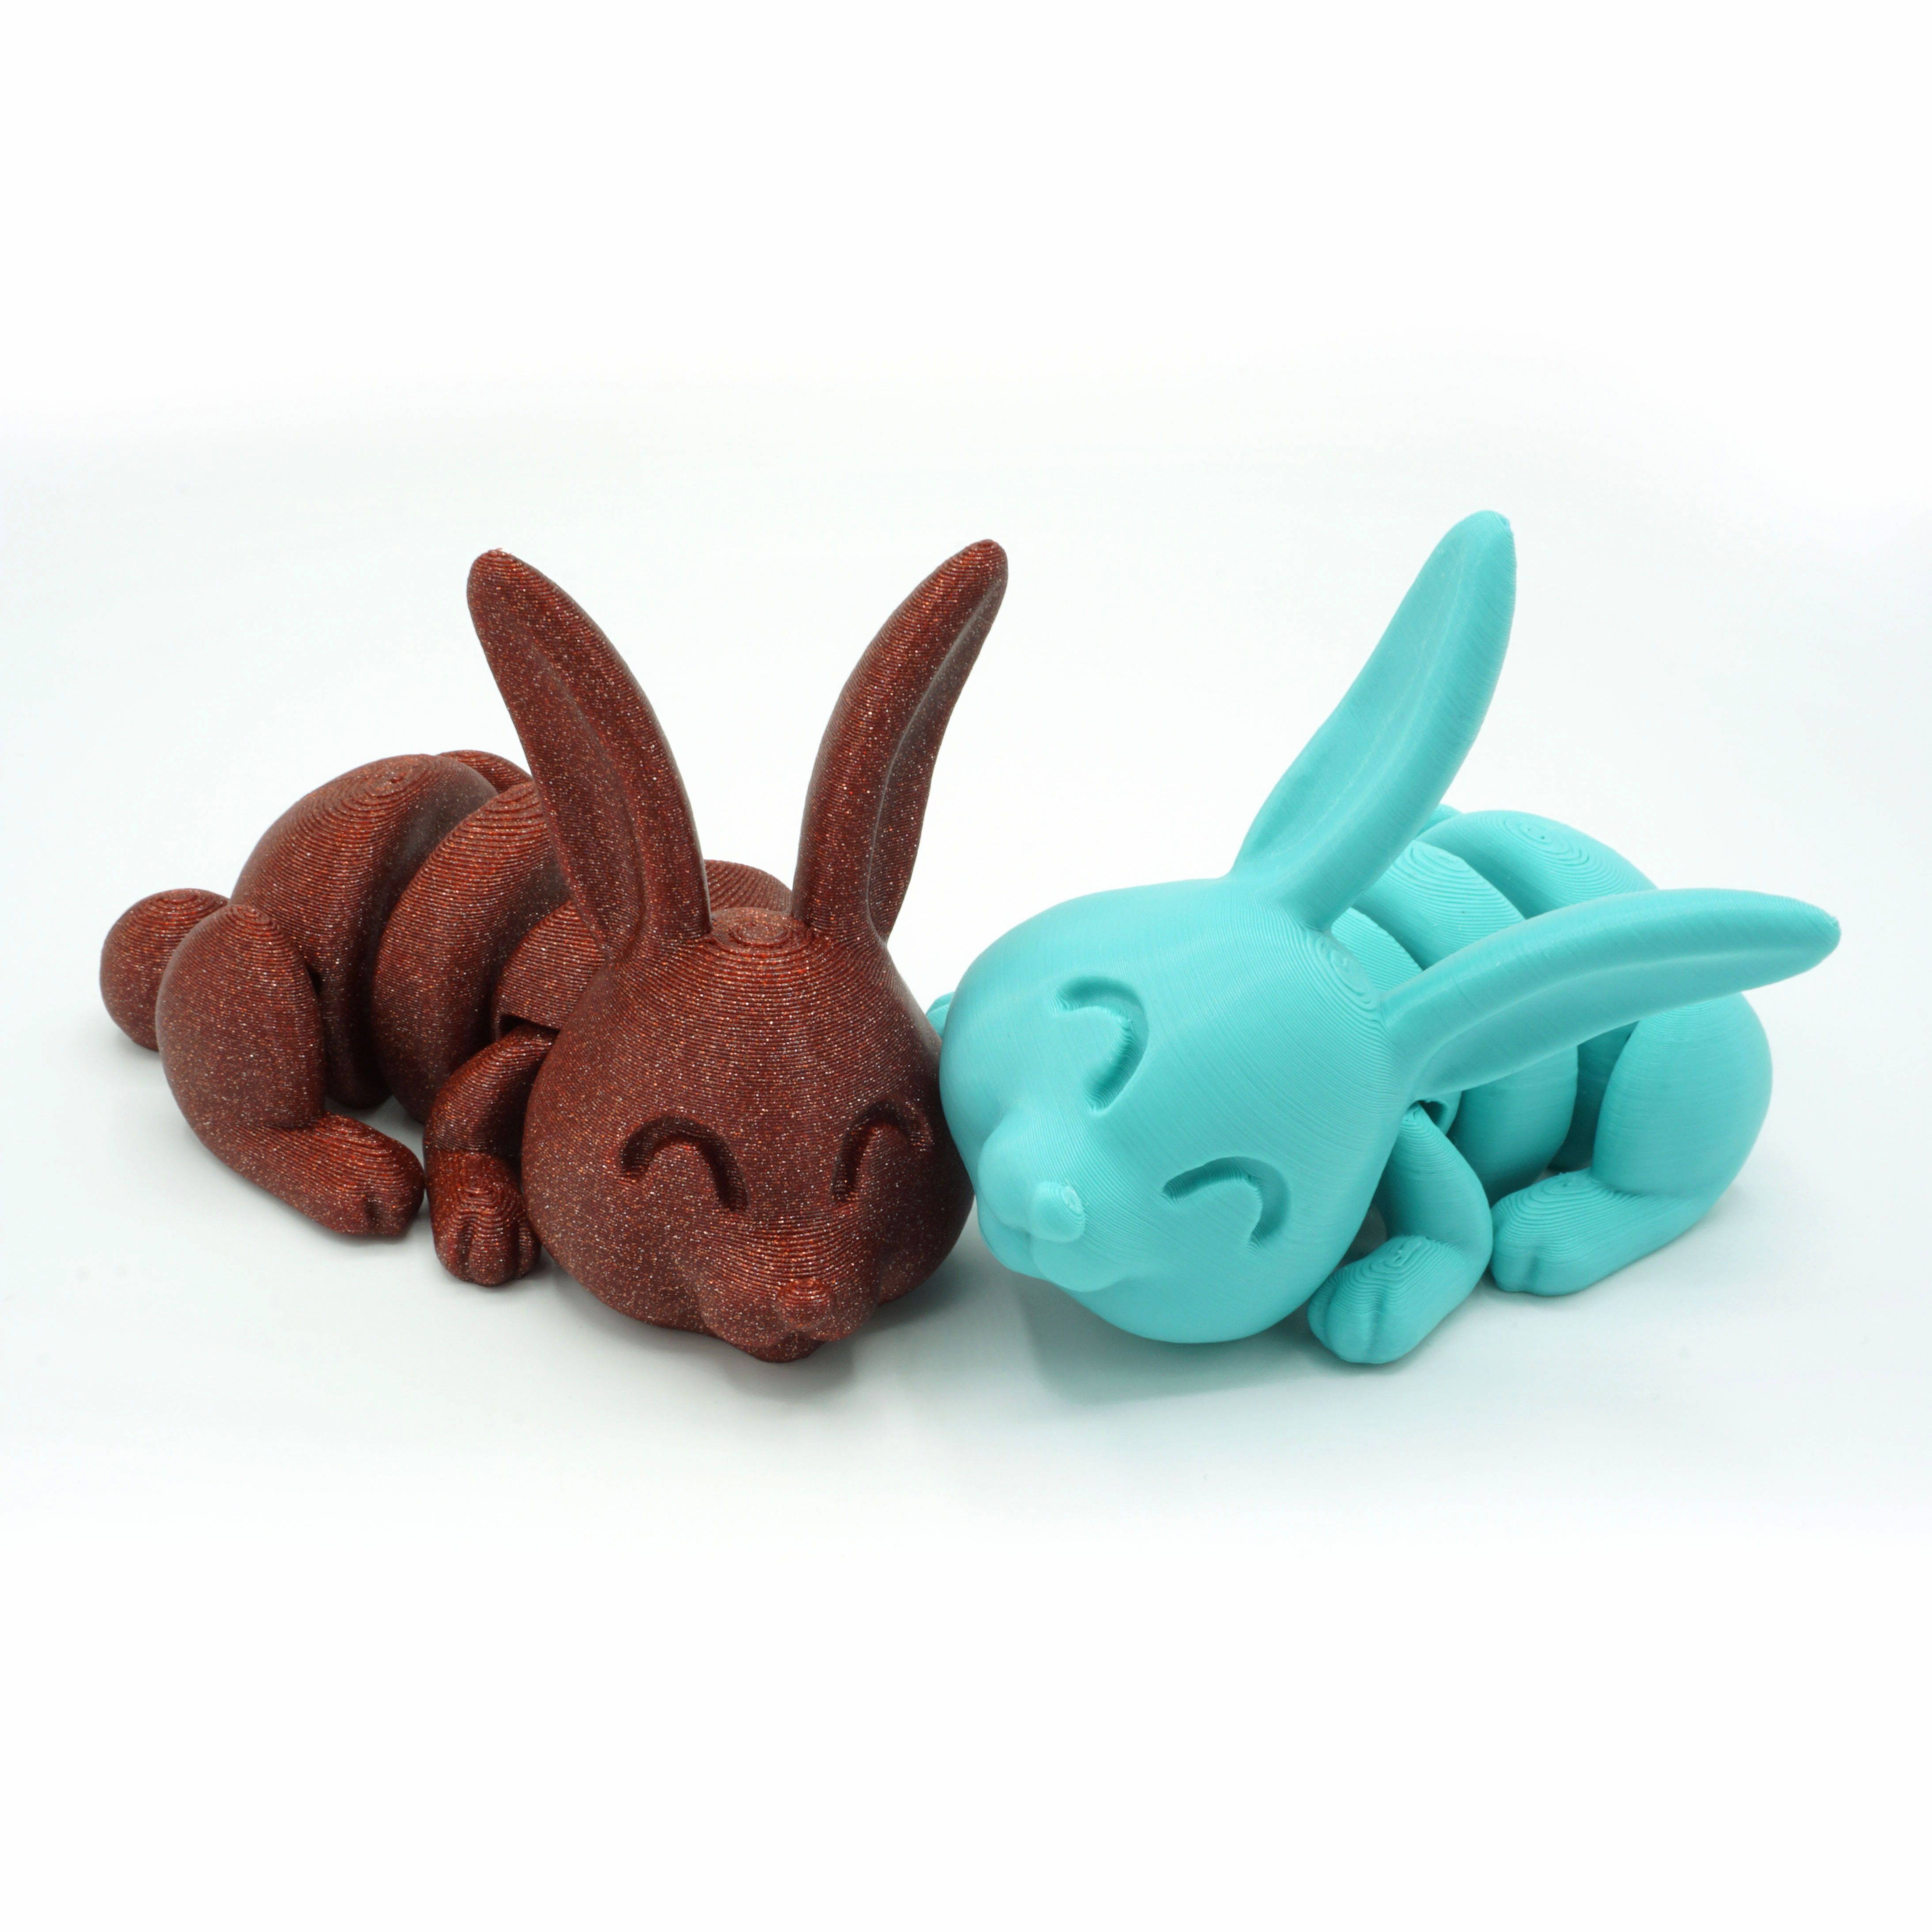 DSC01357 copia.jpg Download STL file Articulated Bunny • 3D printable model, mcgybeer